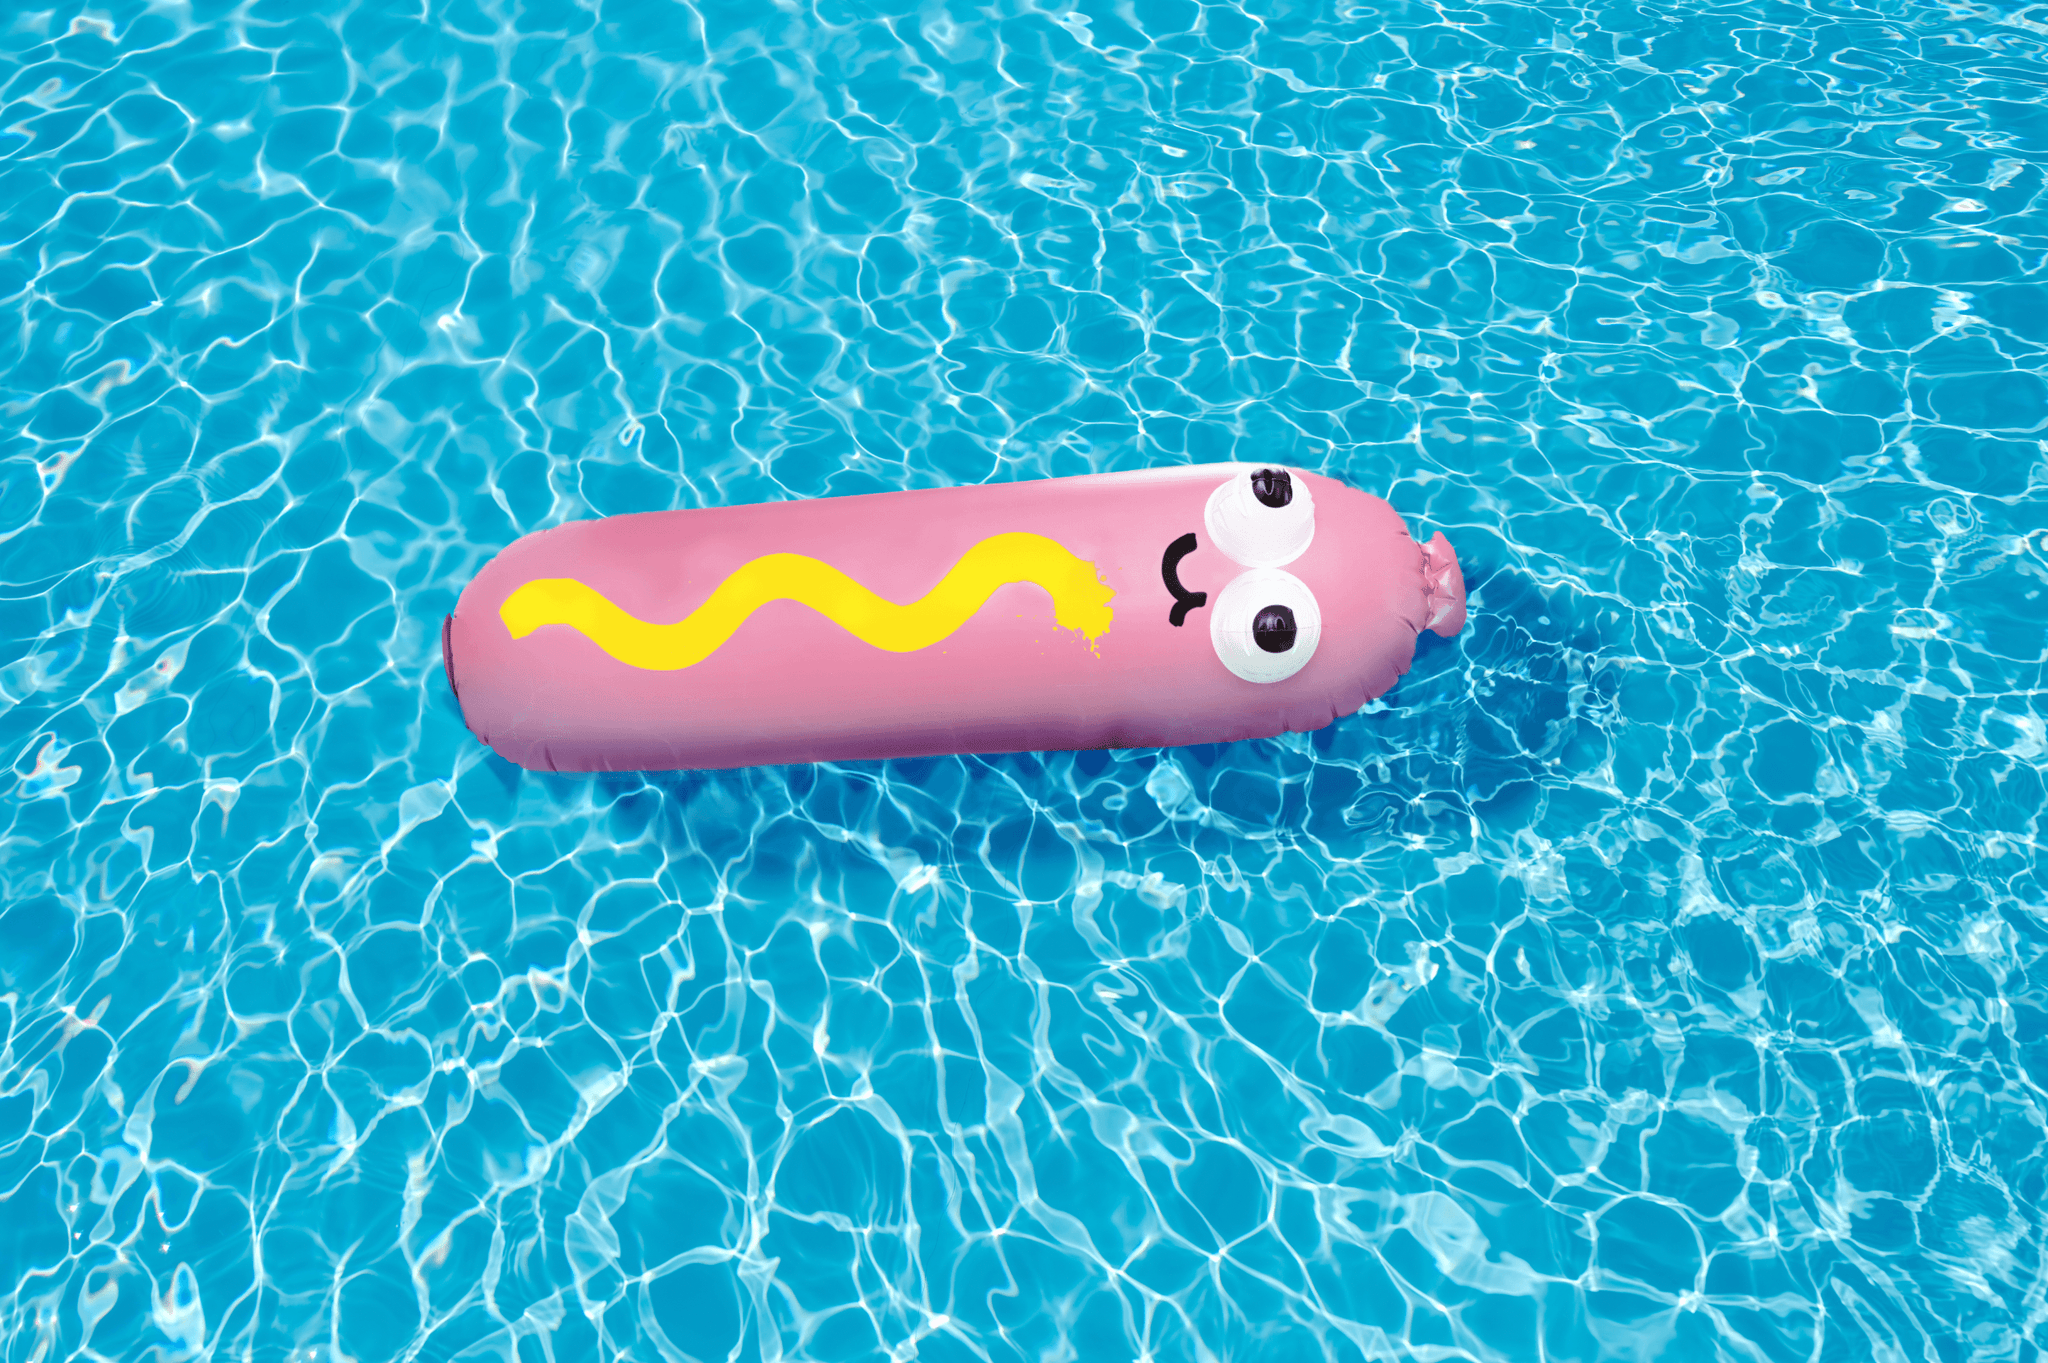 Hot Diggity Dog Pool Float x Jon Burgerman Plastic Third Drawer Down Studio 